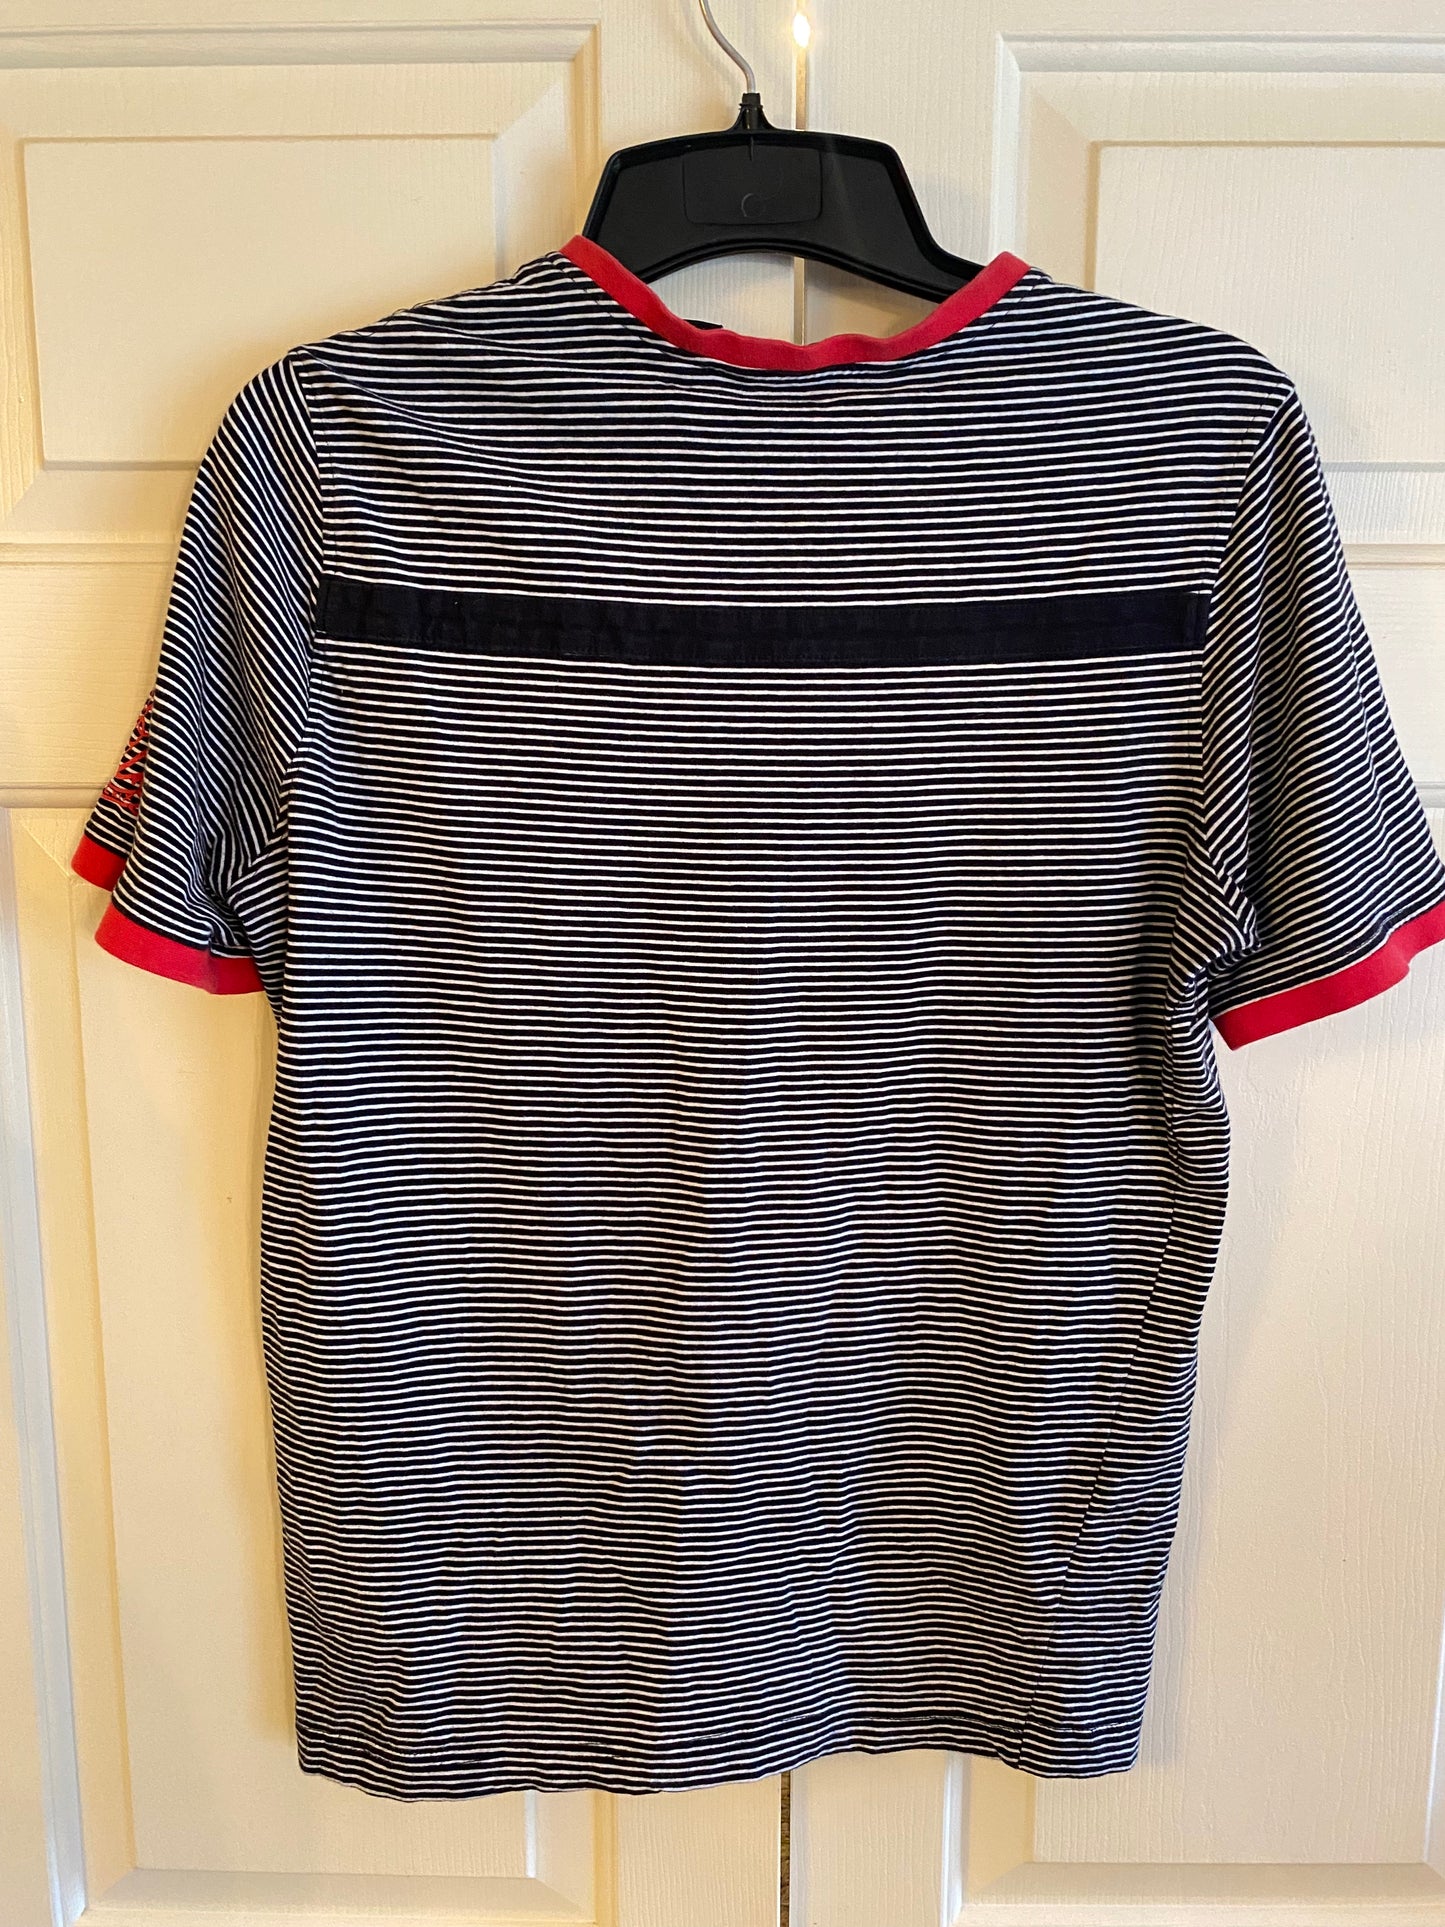 Sean John Mens V Neck T Shirt Size M Gray Black Striped Botton Pocket Red Accent